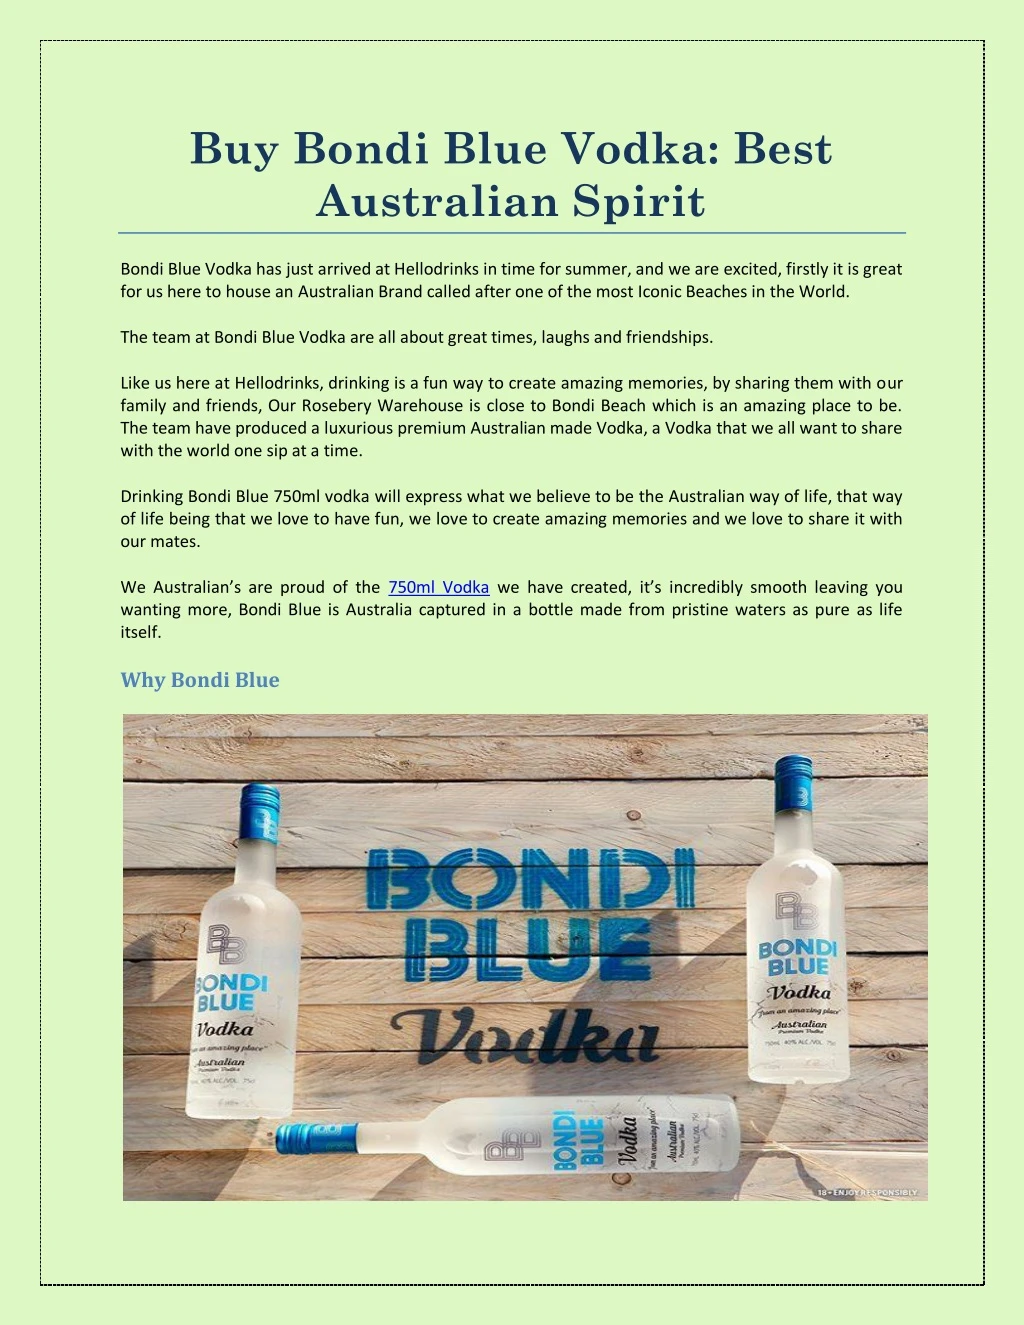 buy bondi blue vodka best australian spirit